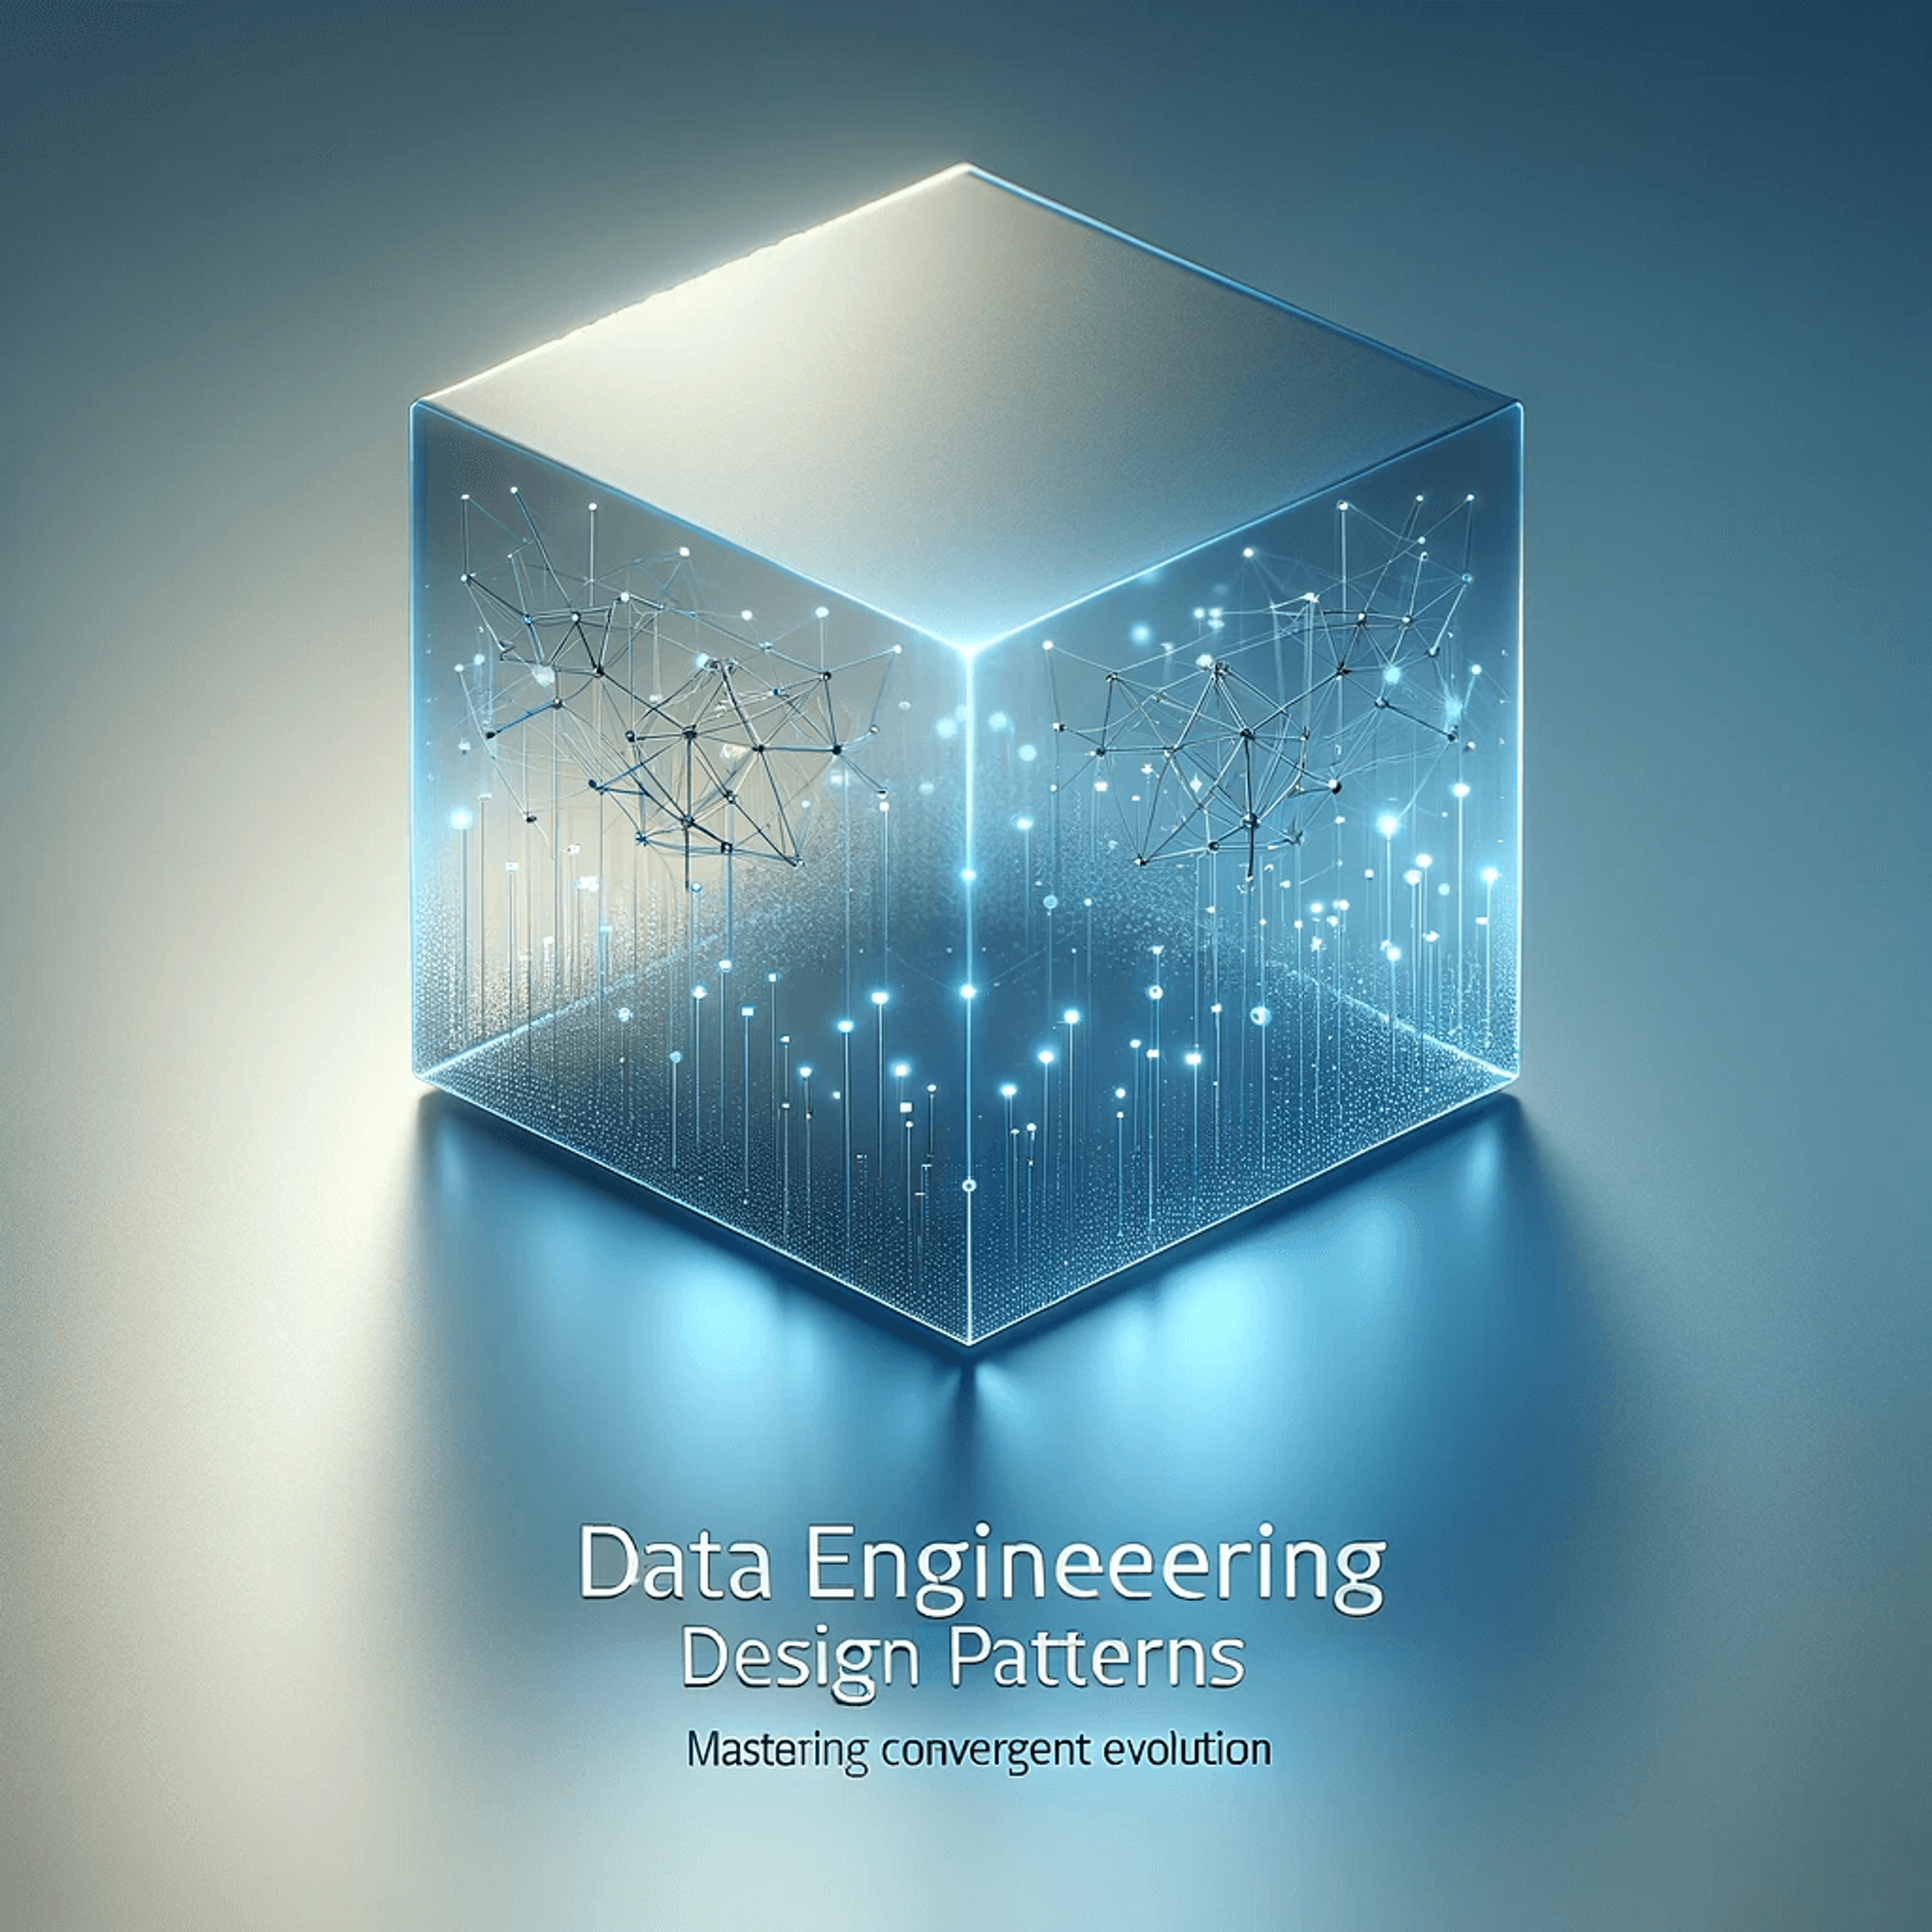 Data Engineering Design Patterns: Mastering Convergent Evolution